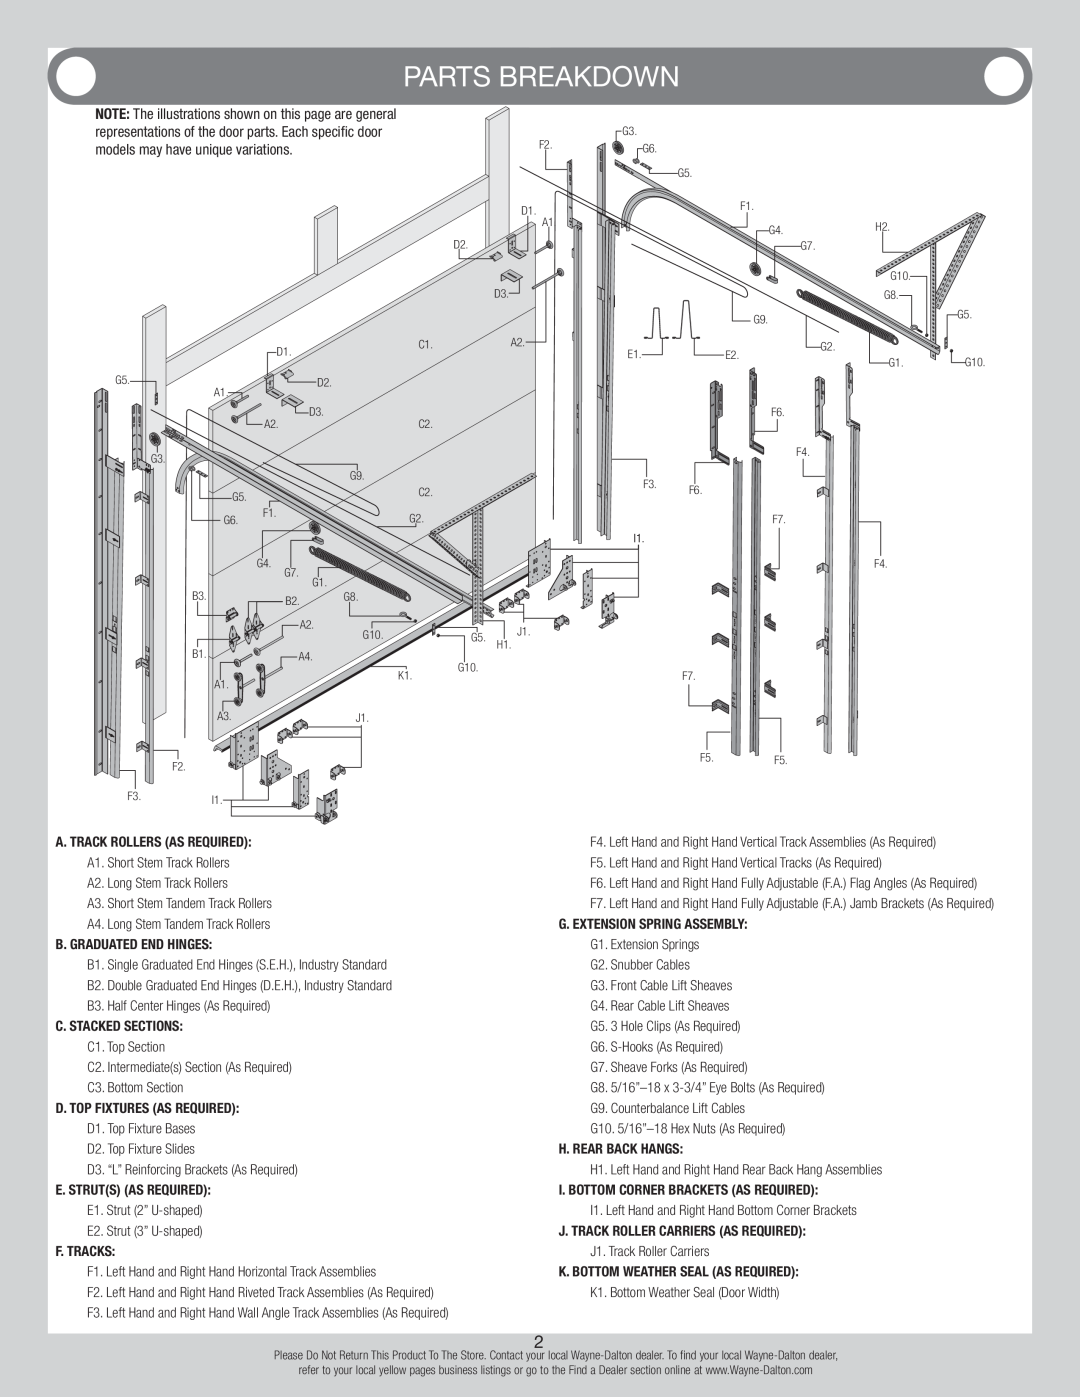 Wayne-Dalton 44 installation instructions Parts Breakdown 